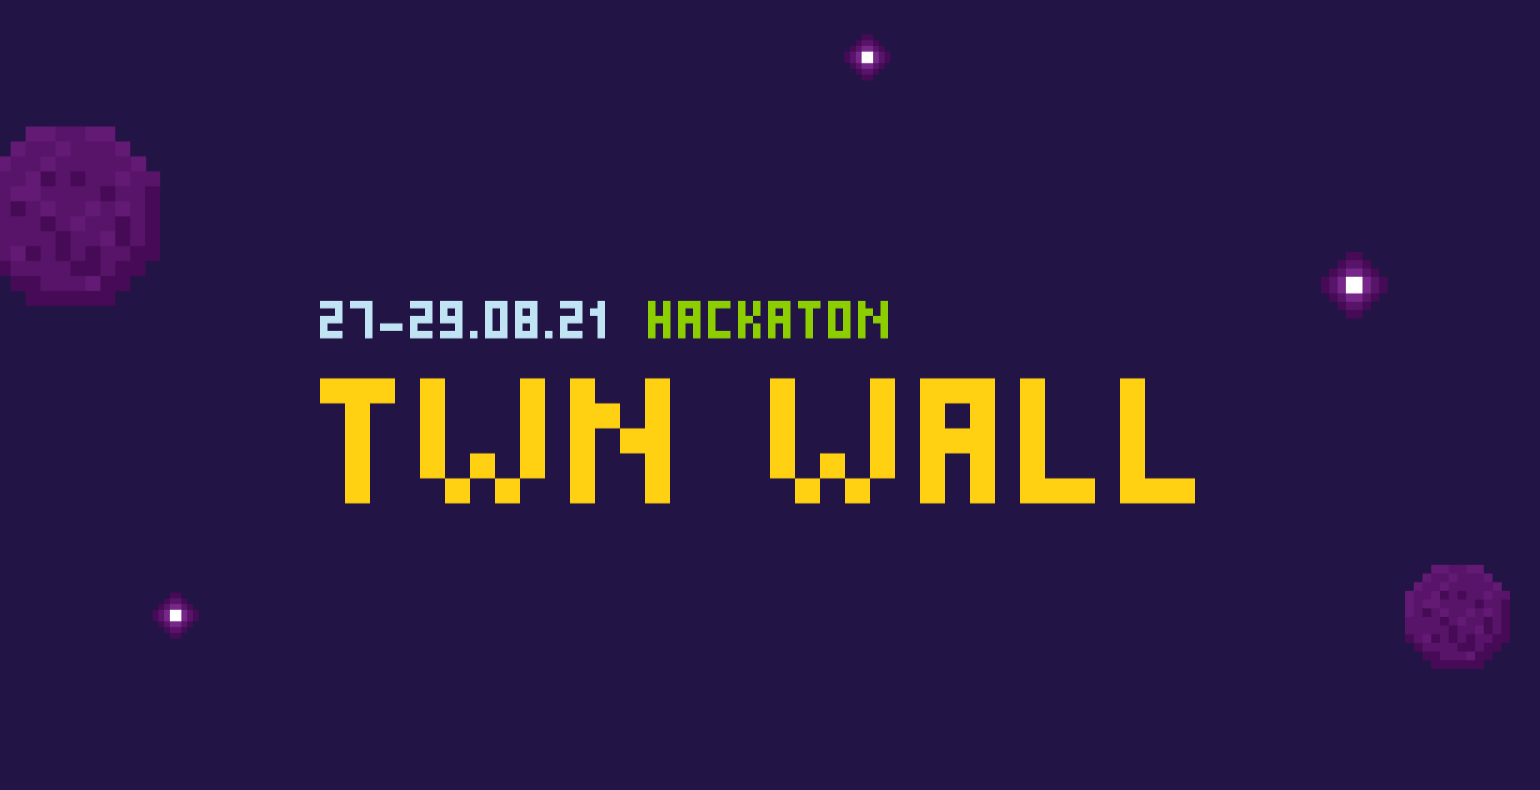 TWN wall, interactive wall board, hackathon 27-29.08.21